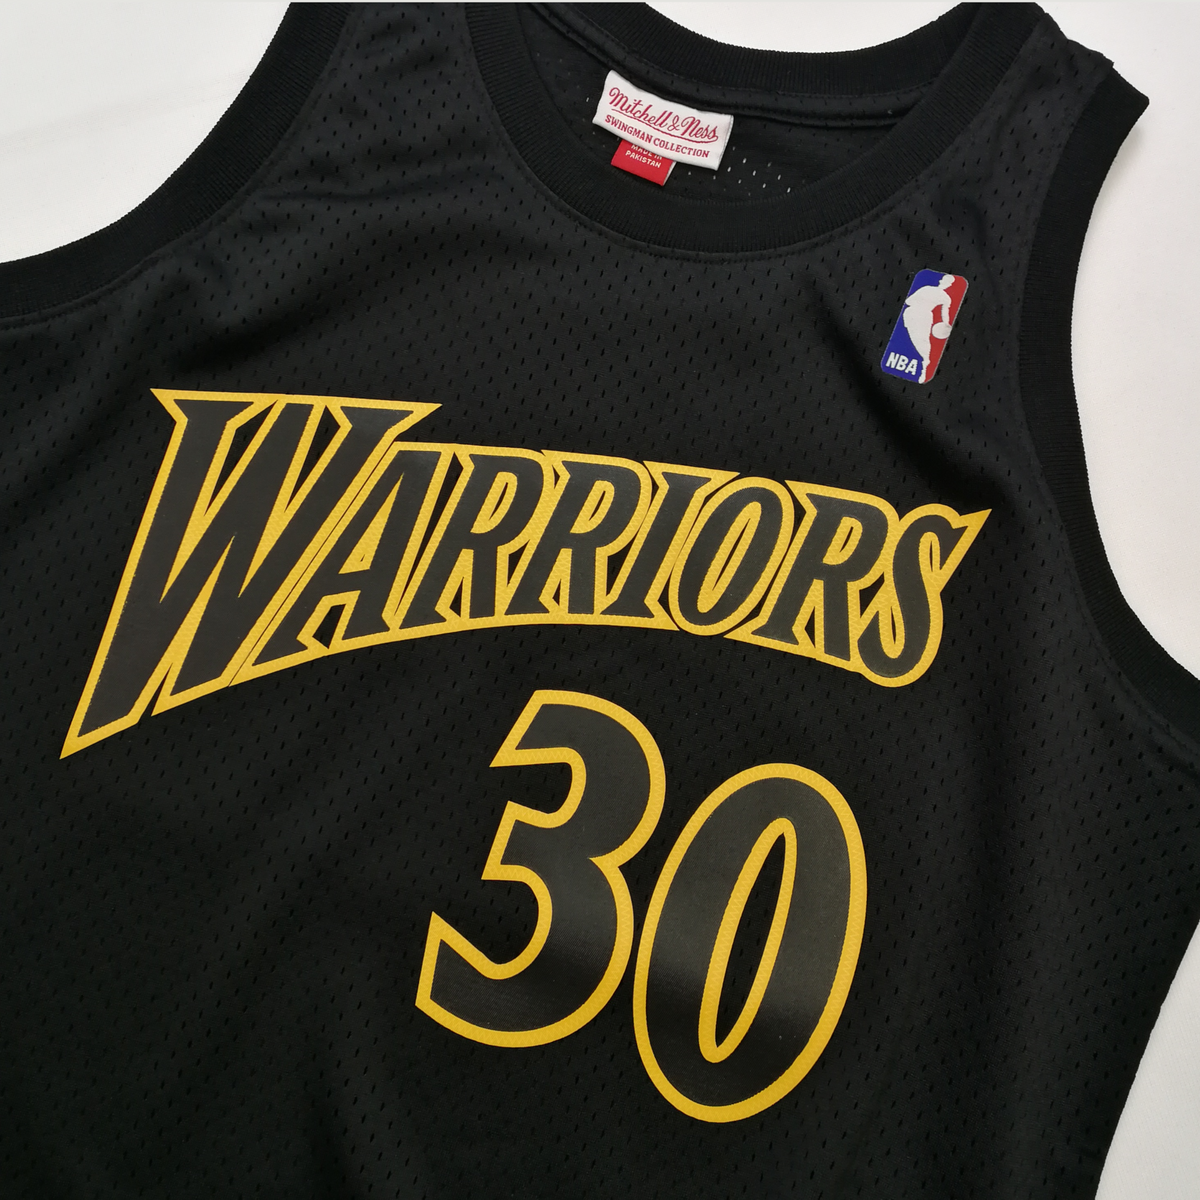 Golden State Warriors Black Jersey - Stephen Curry size XL